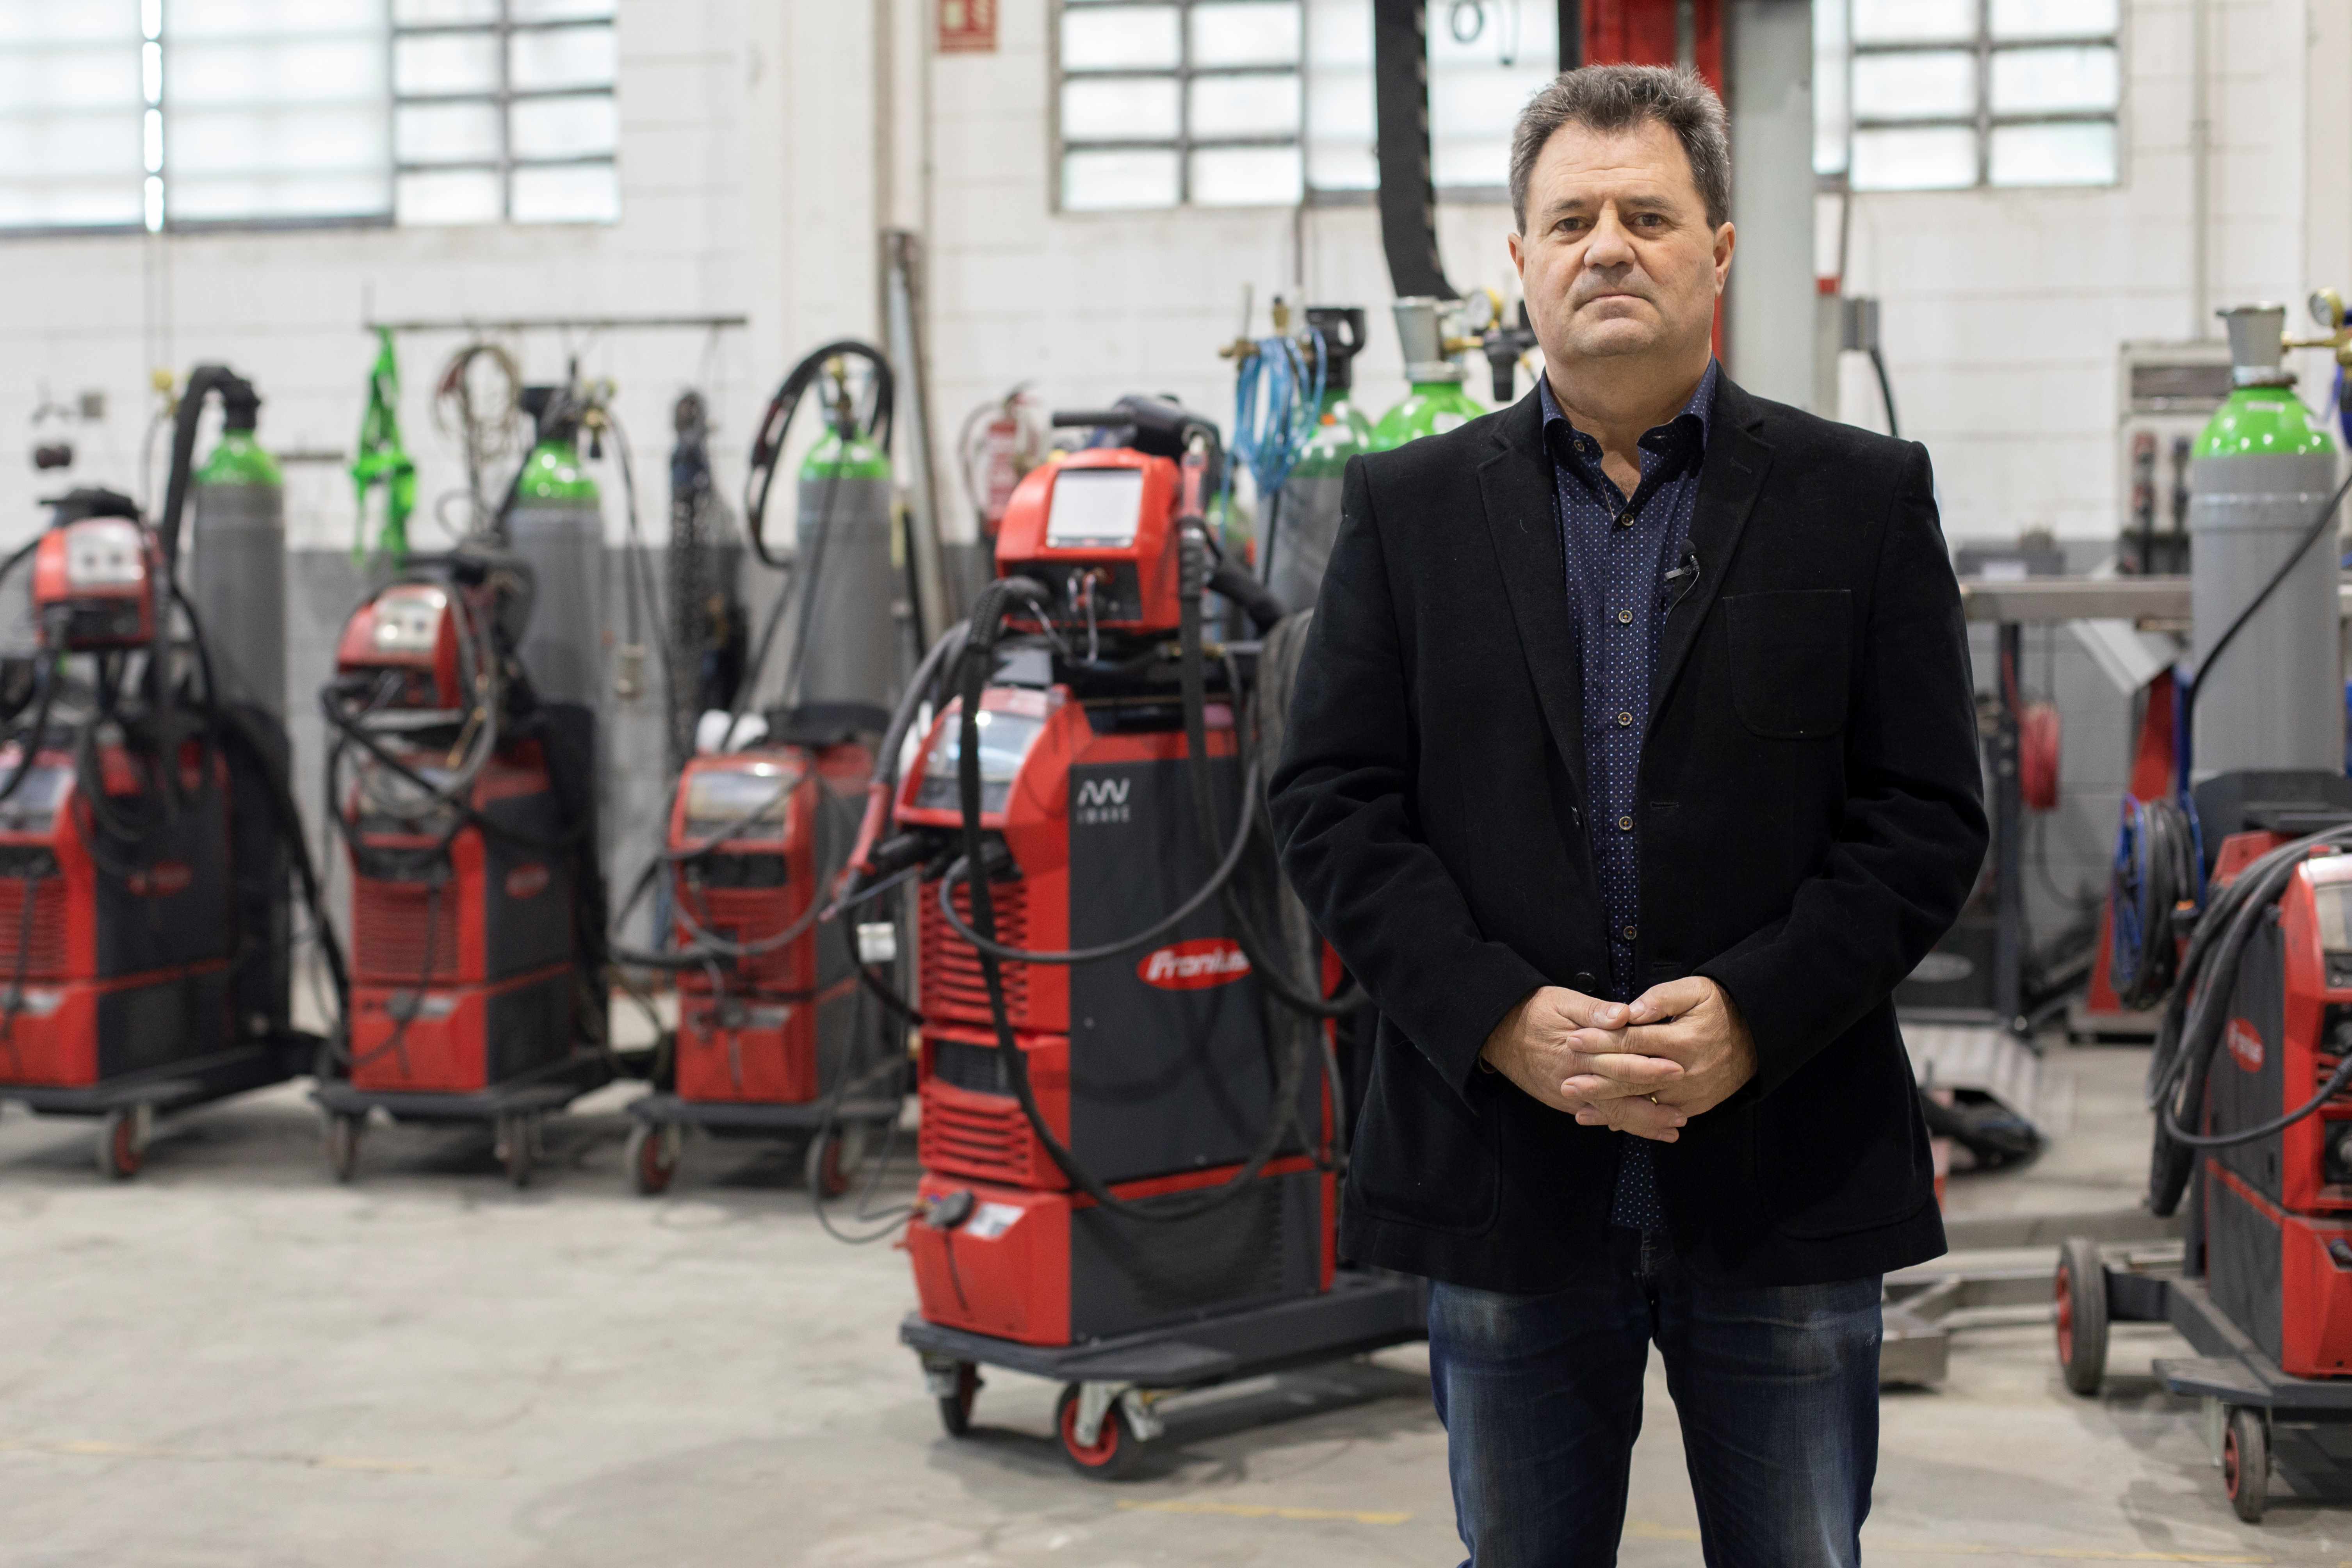 David Viñolas, Managing Director, Viñolas Metall, in front of Fronius welding systems.